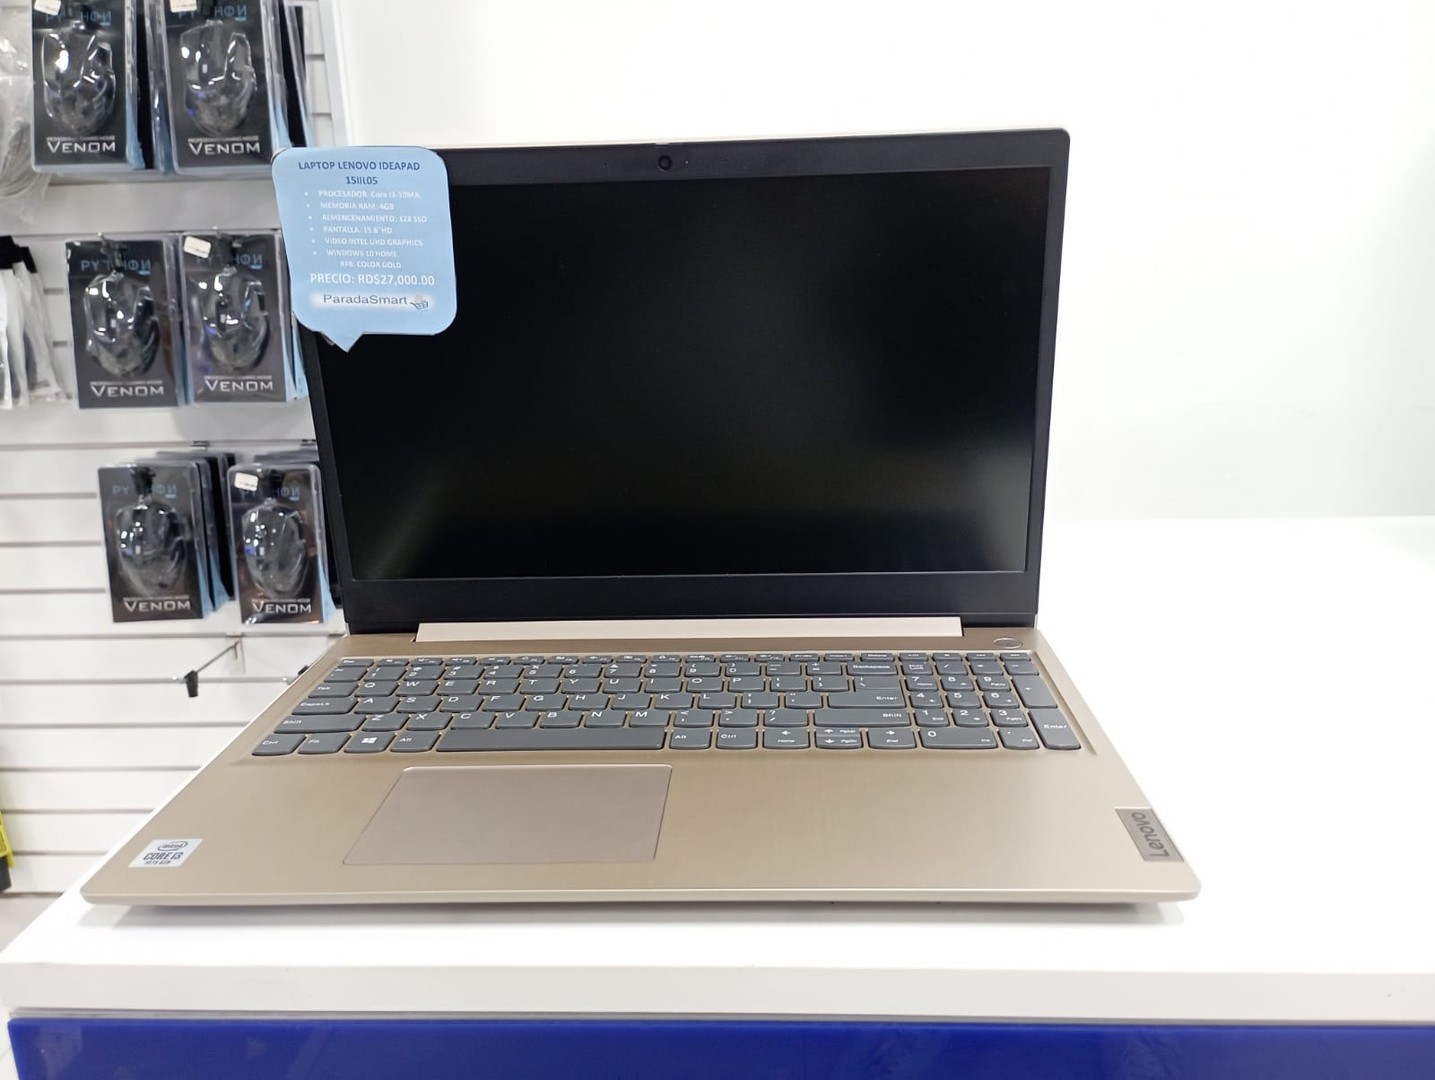 computadoras y laptops - Laptop Lenovo Idea pad 15IIL05 core i3-10ma 4gb Ram, 128gb ssd, Pantalla 15.6